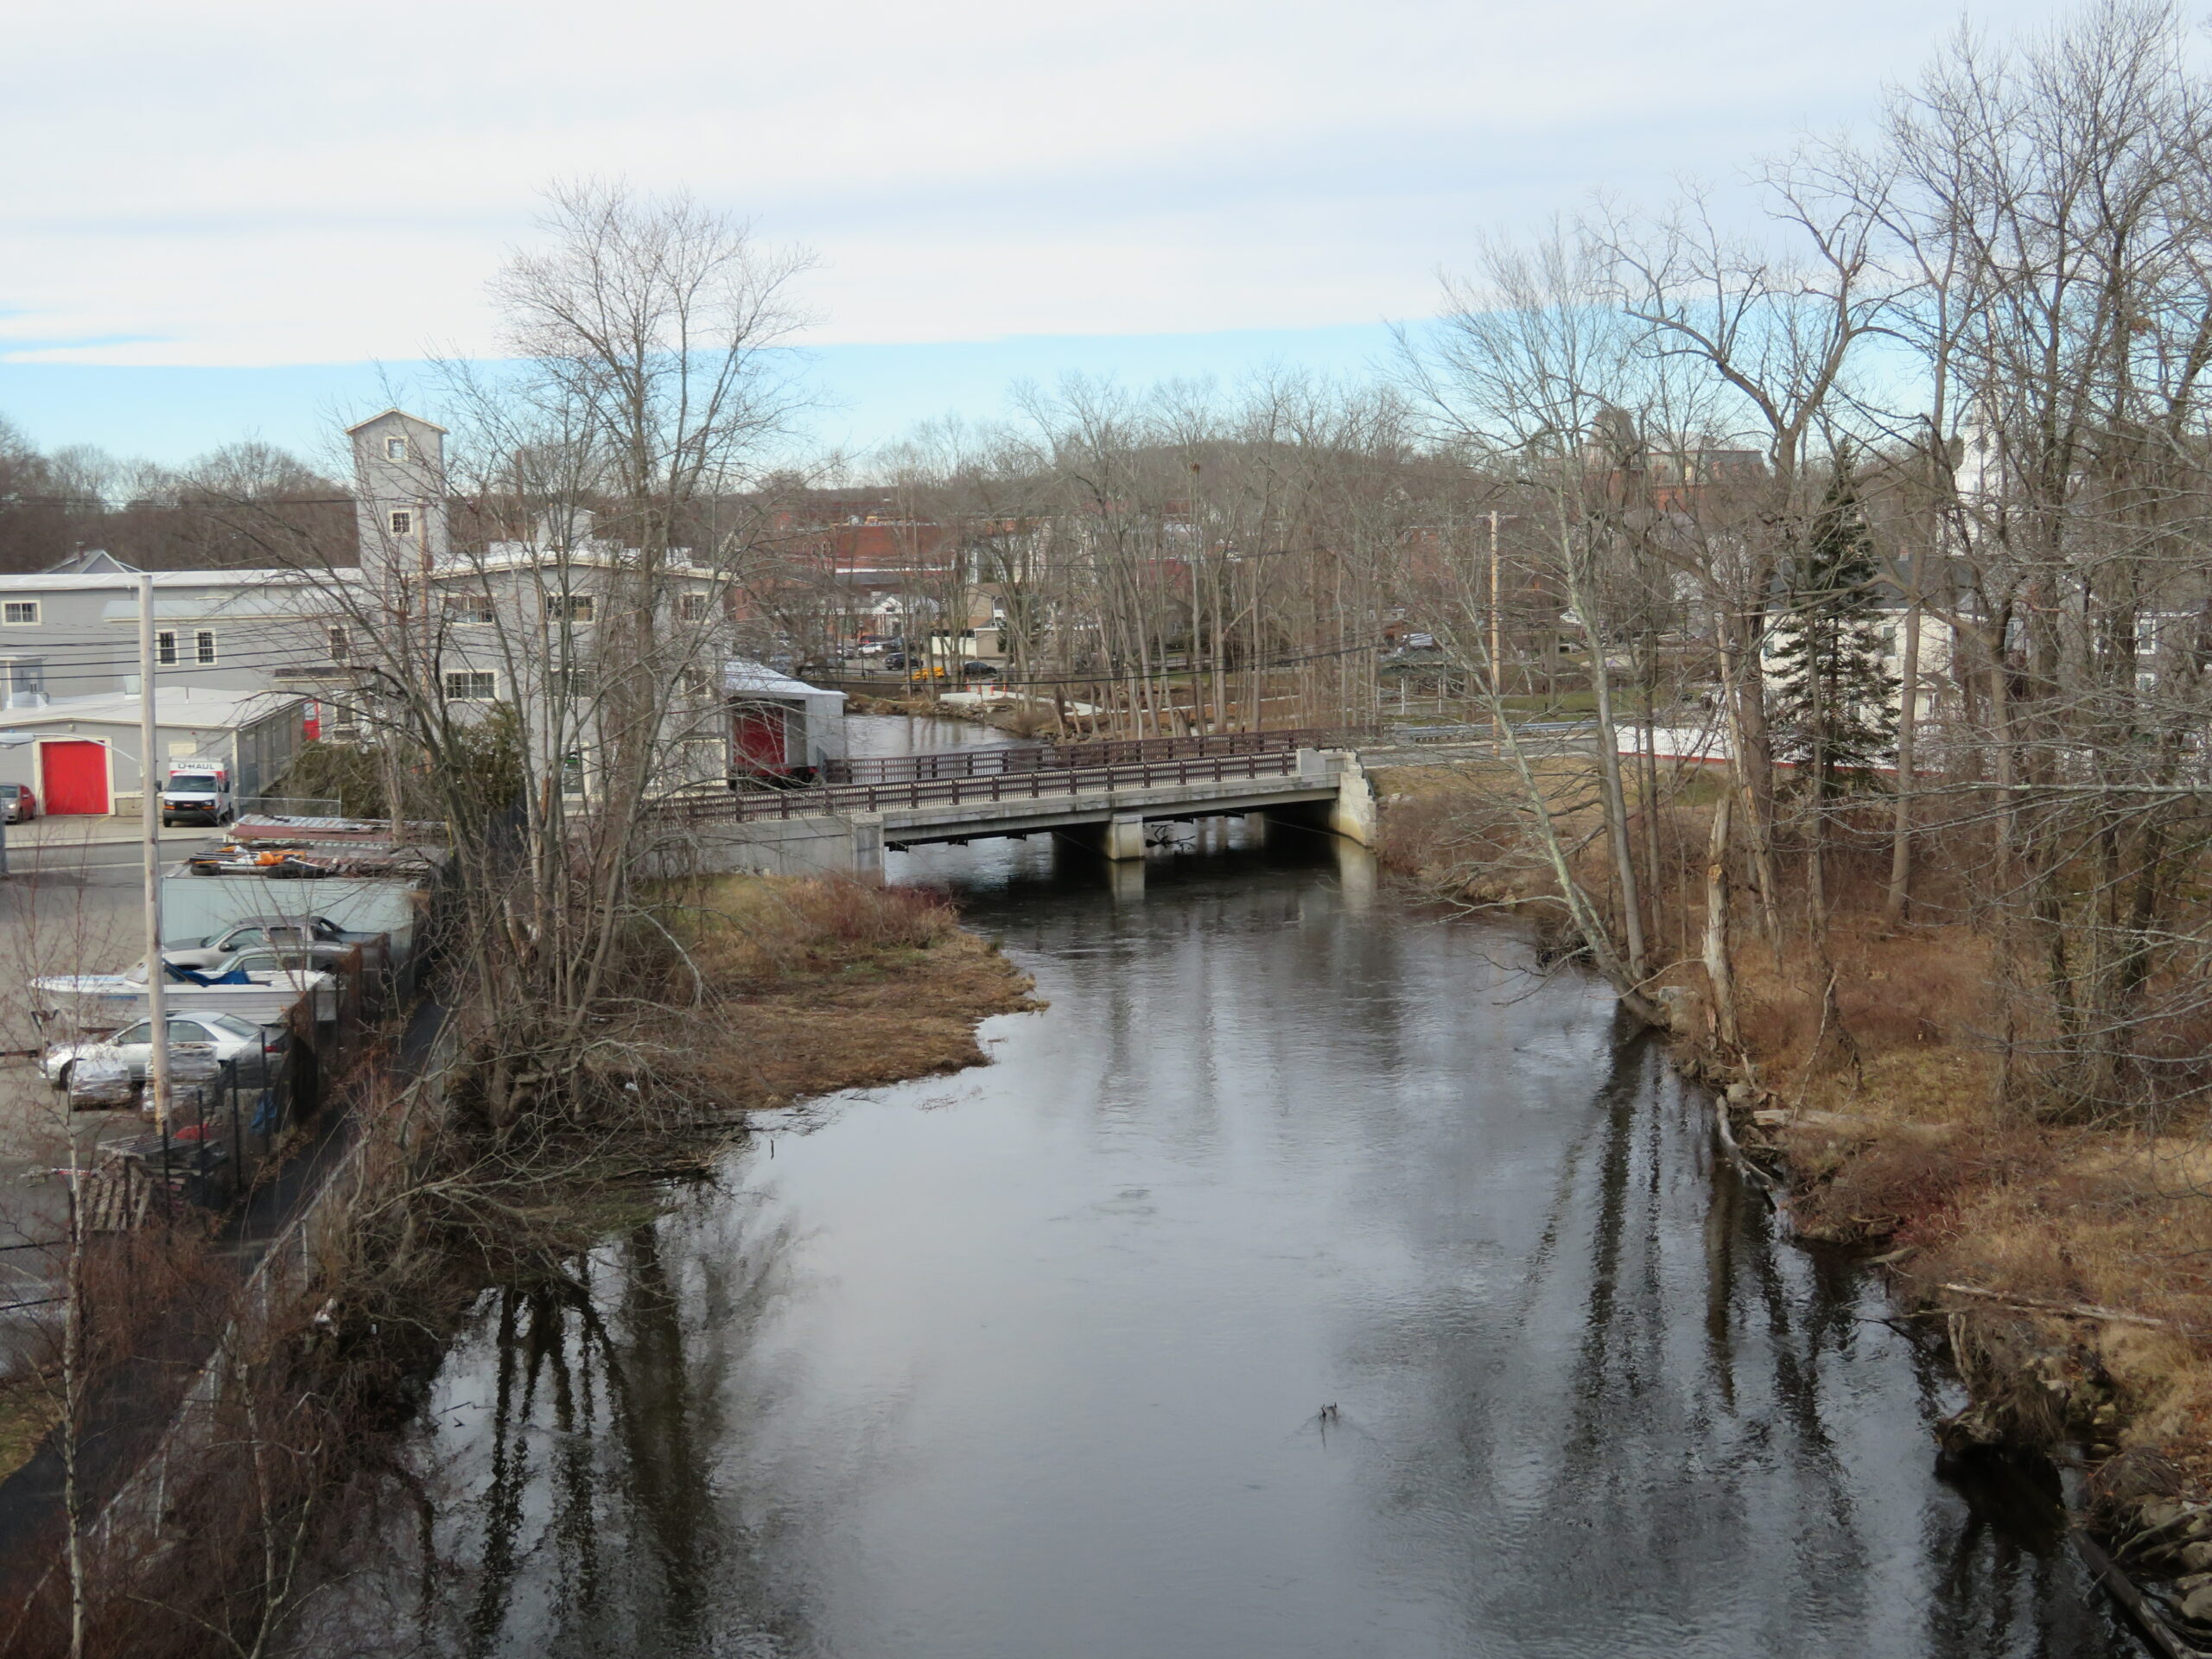 A view of the Assabet River from the railroad bridge near Hudson Center.